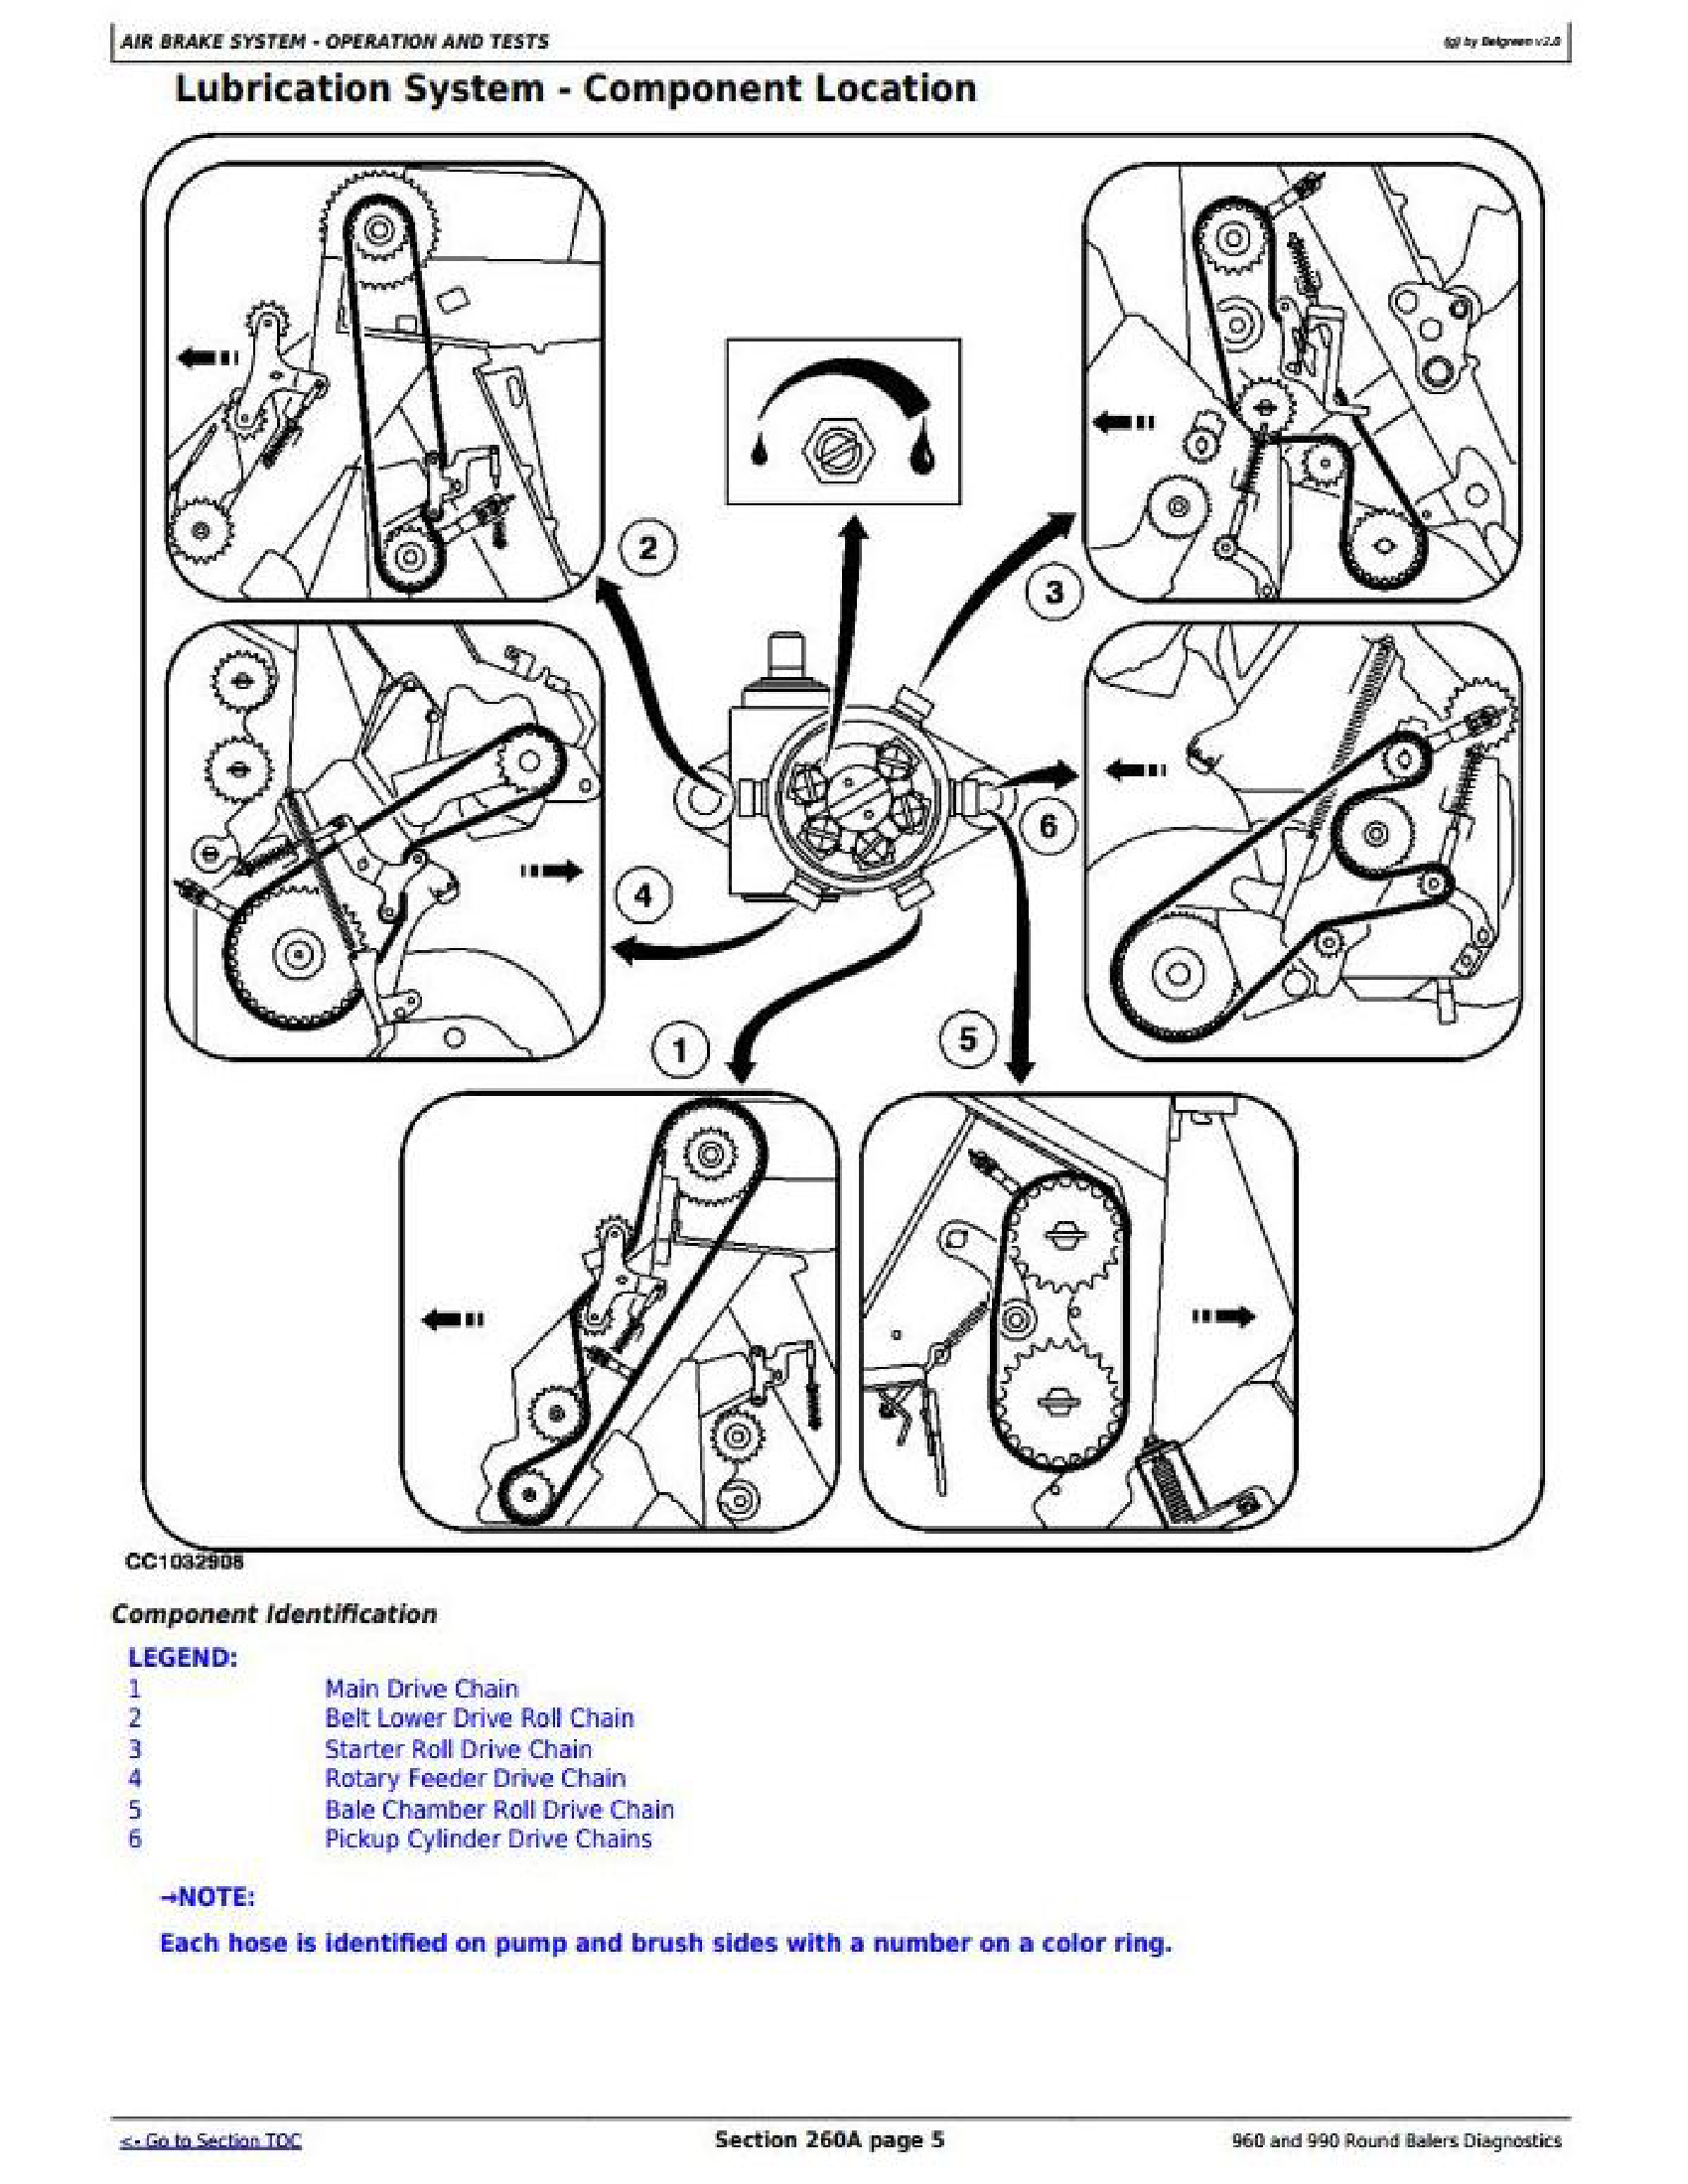 John Deere S560i manual pdf